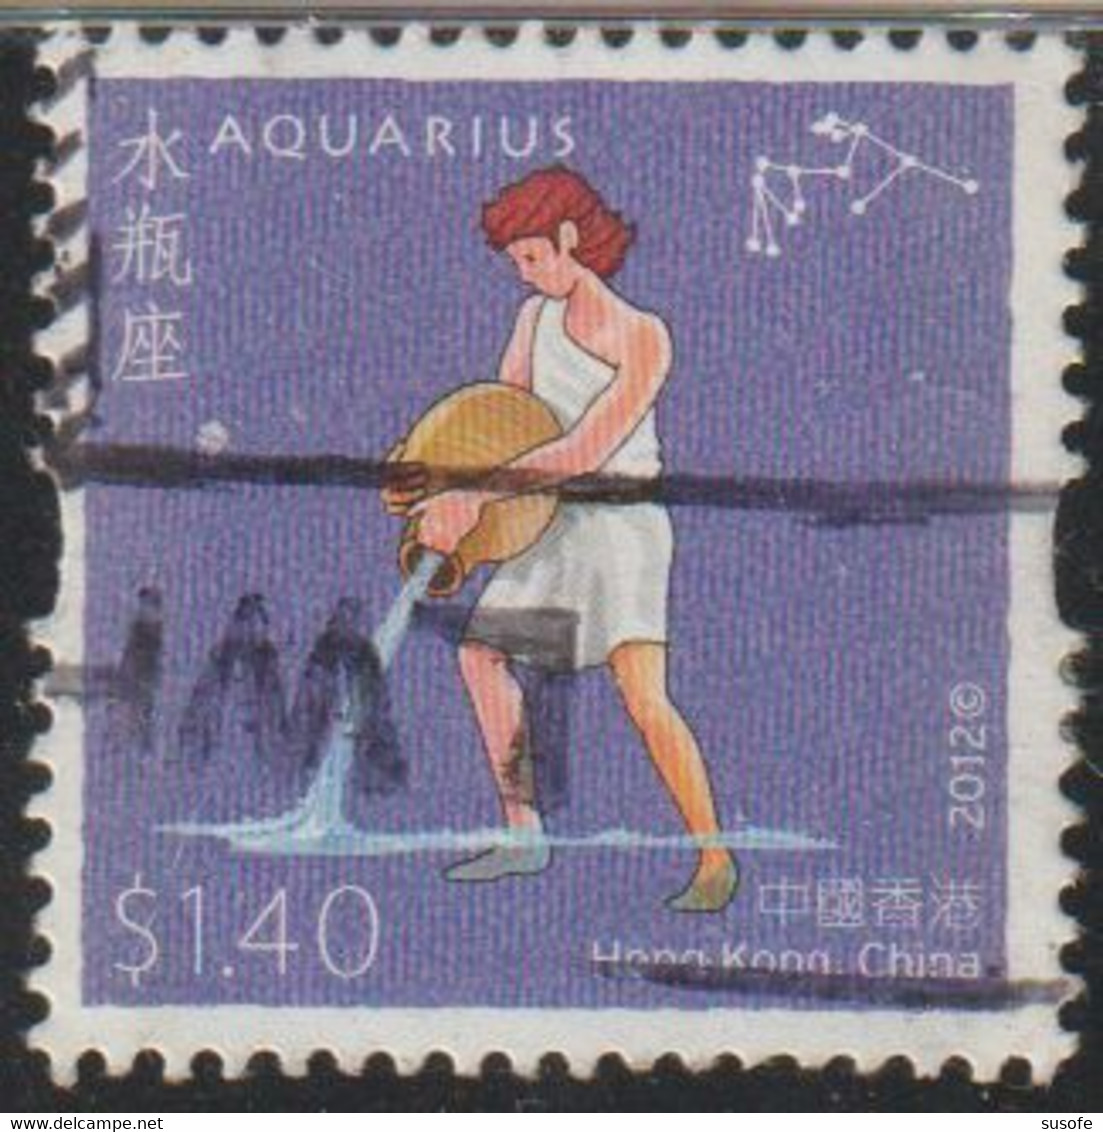 Hong Kong China 2012 Scott 1738 Sello º Signos Del Zodiaco Acuario Aquarius Michel 1739 Yvert 1606 Stamps Timbre - Used Stamps